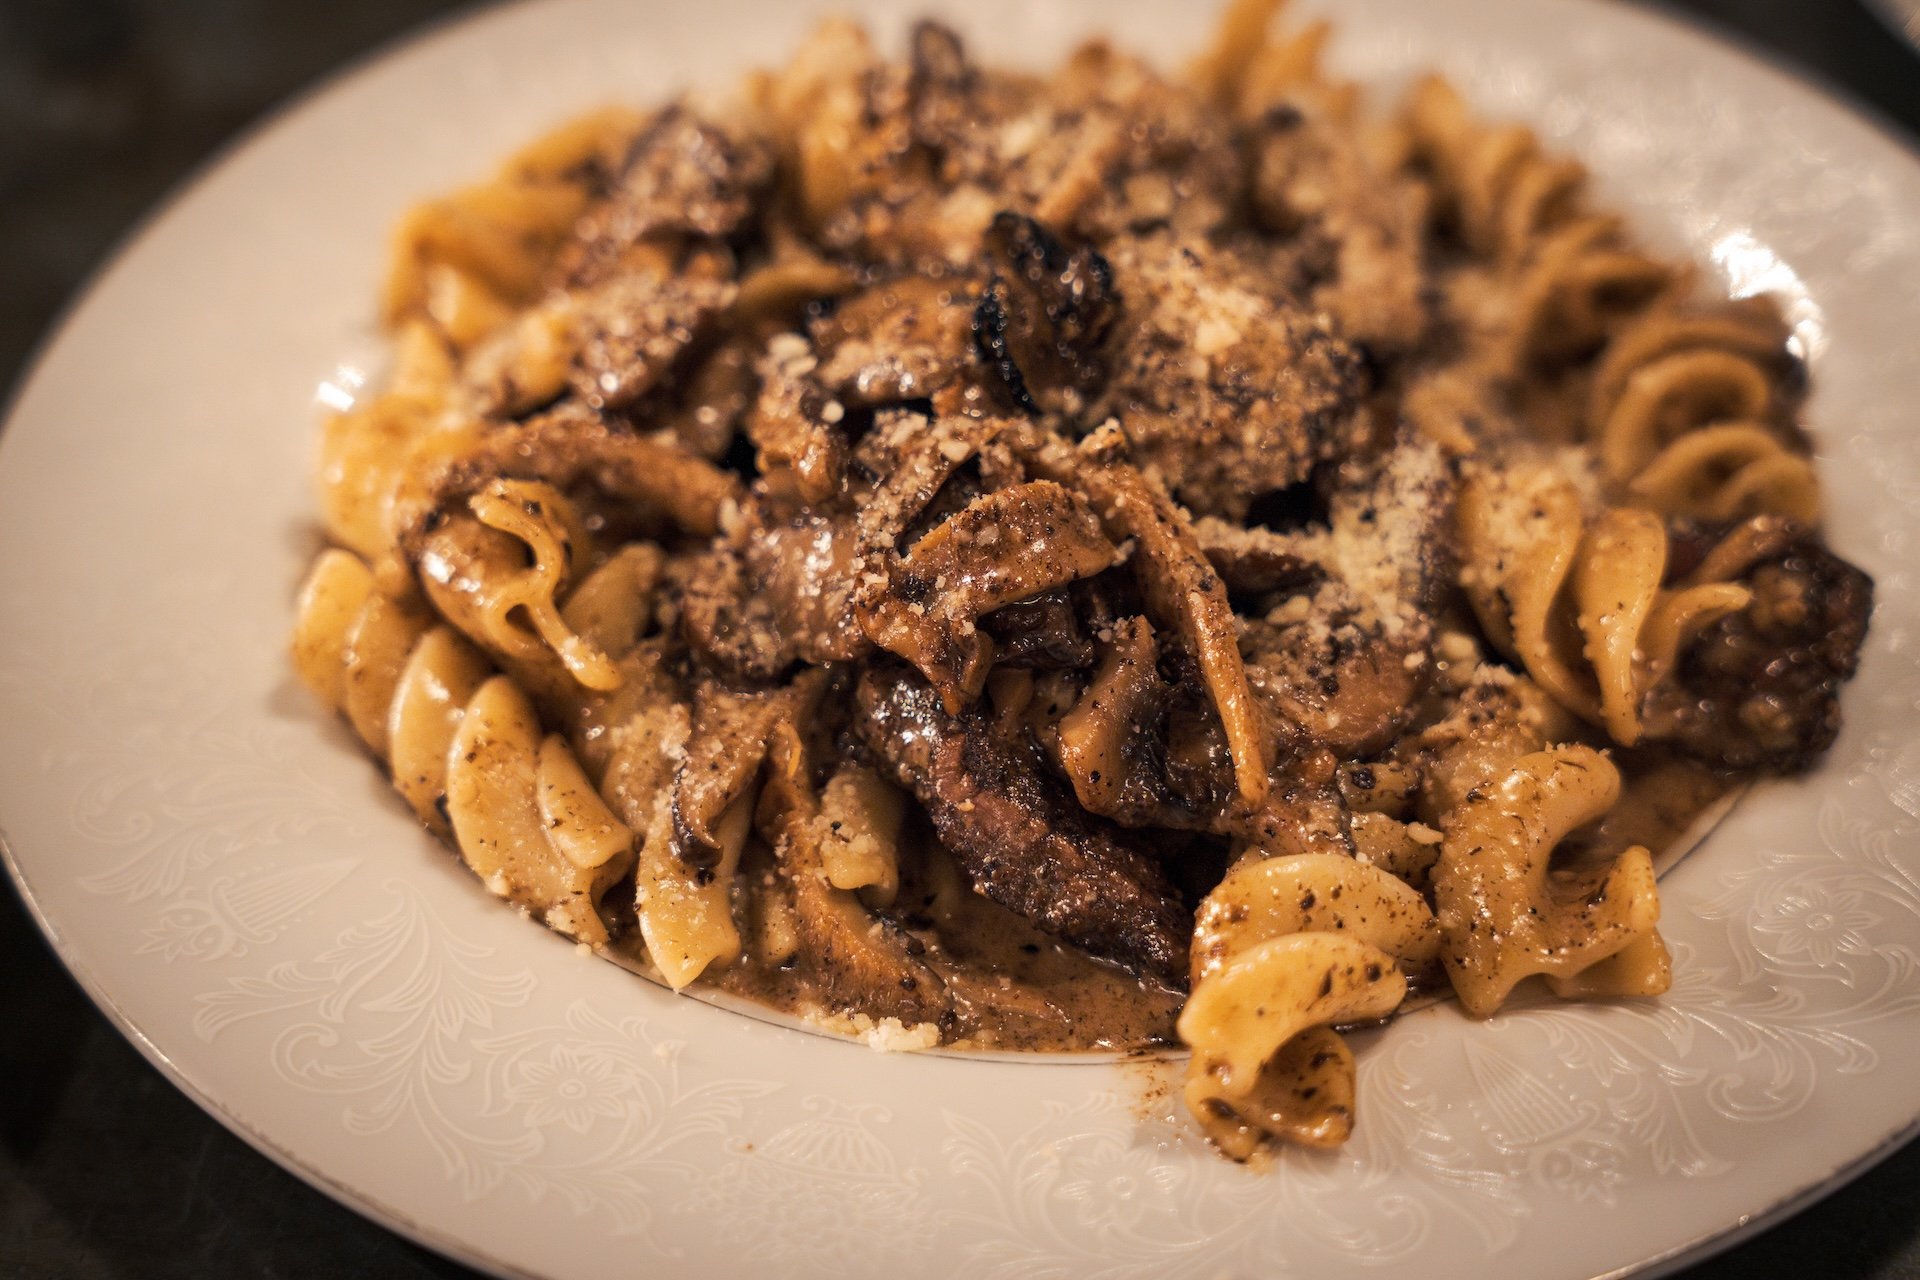 Adelinas pasta specials include this mushroom and filet fusilloni pasta with porcini cream sauce,  shaved black truffle, and Pecorino Romano